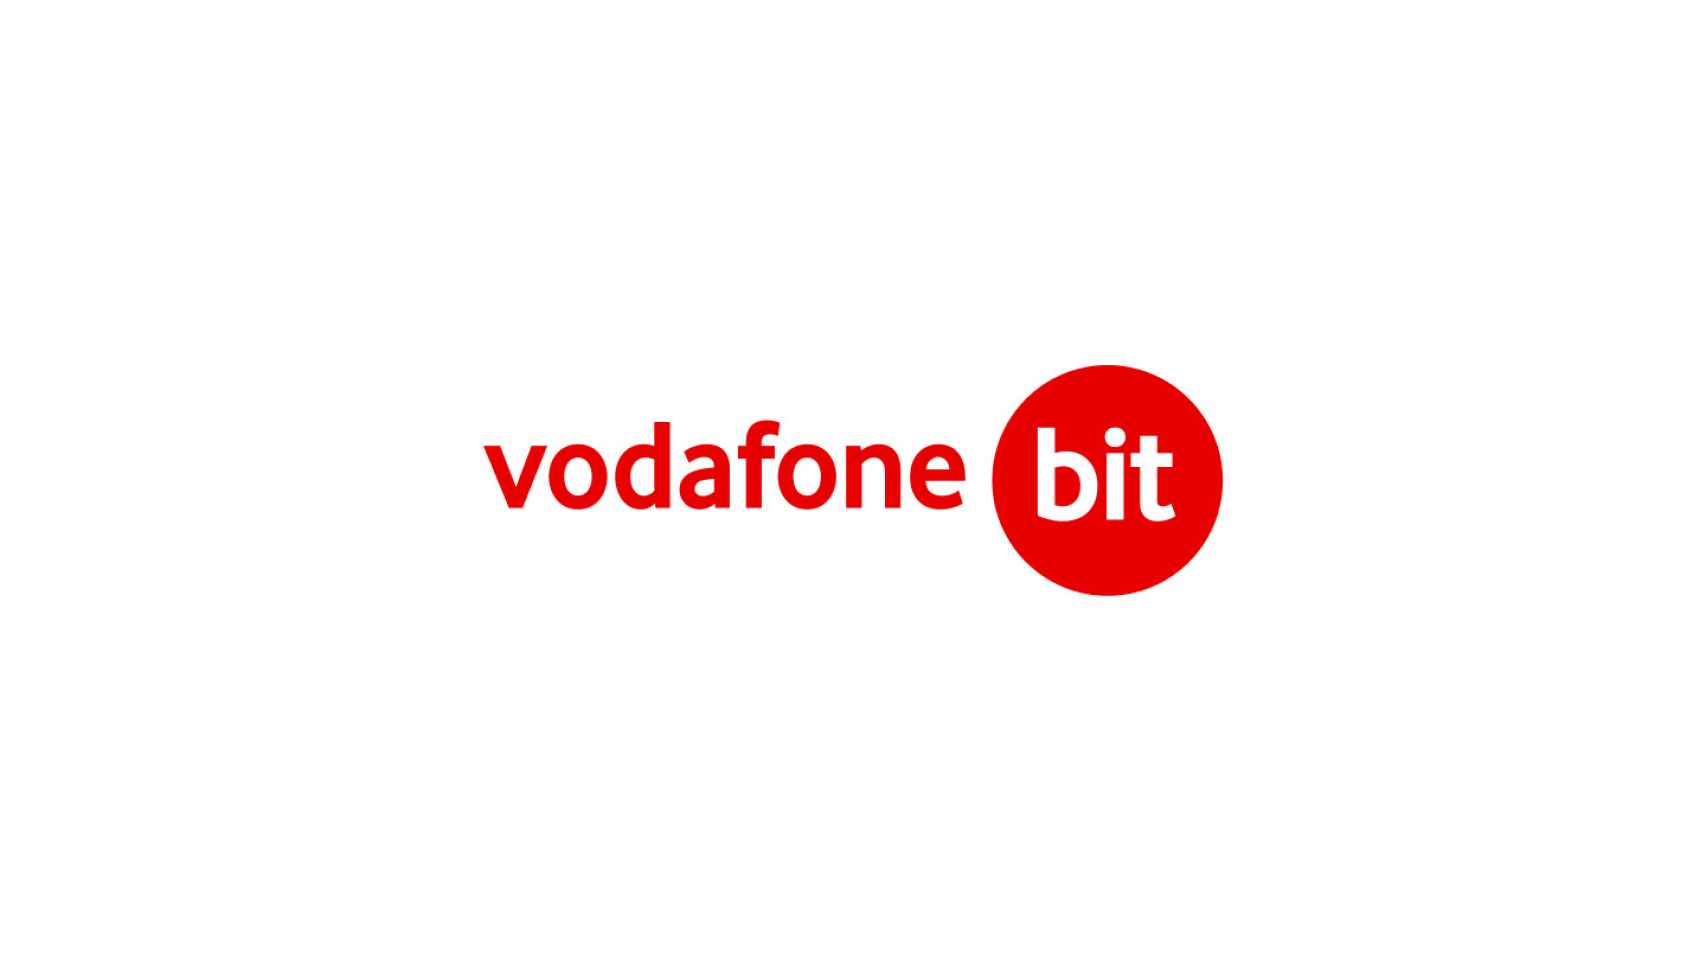 Vodafone Bit: móvil y fibra baratos hacer frente a Movistar O2